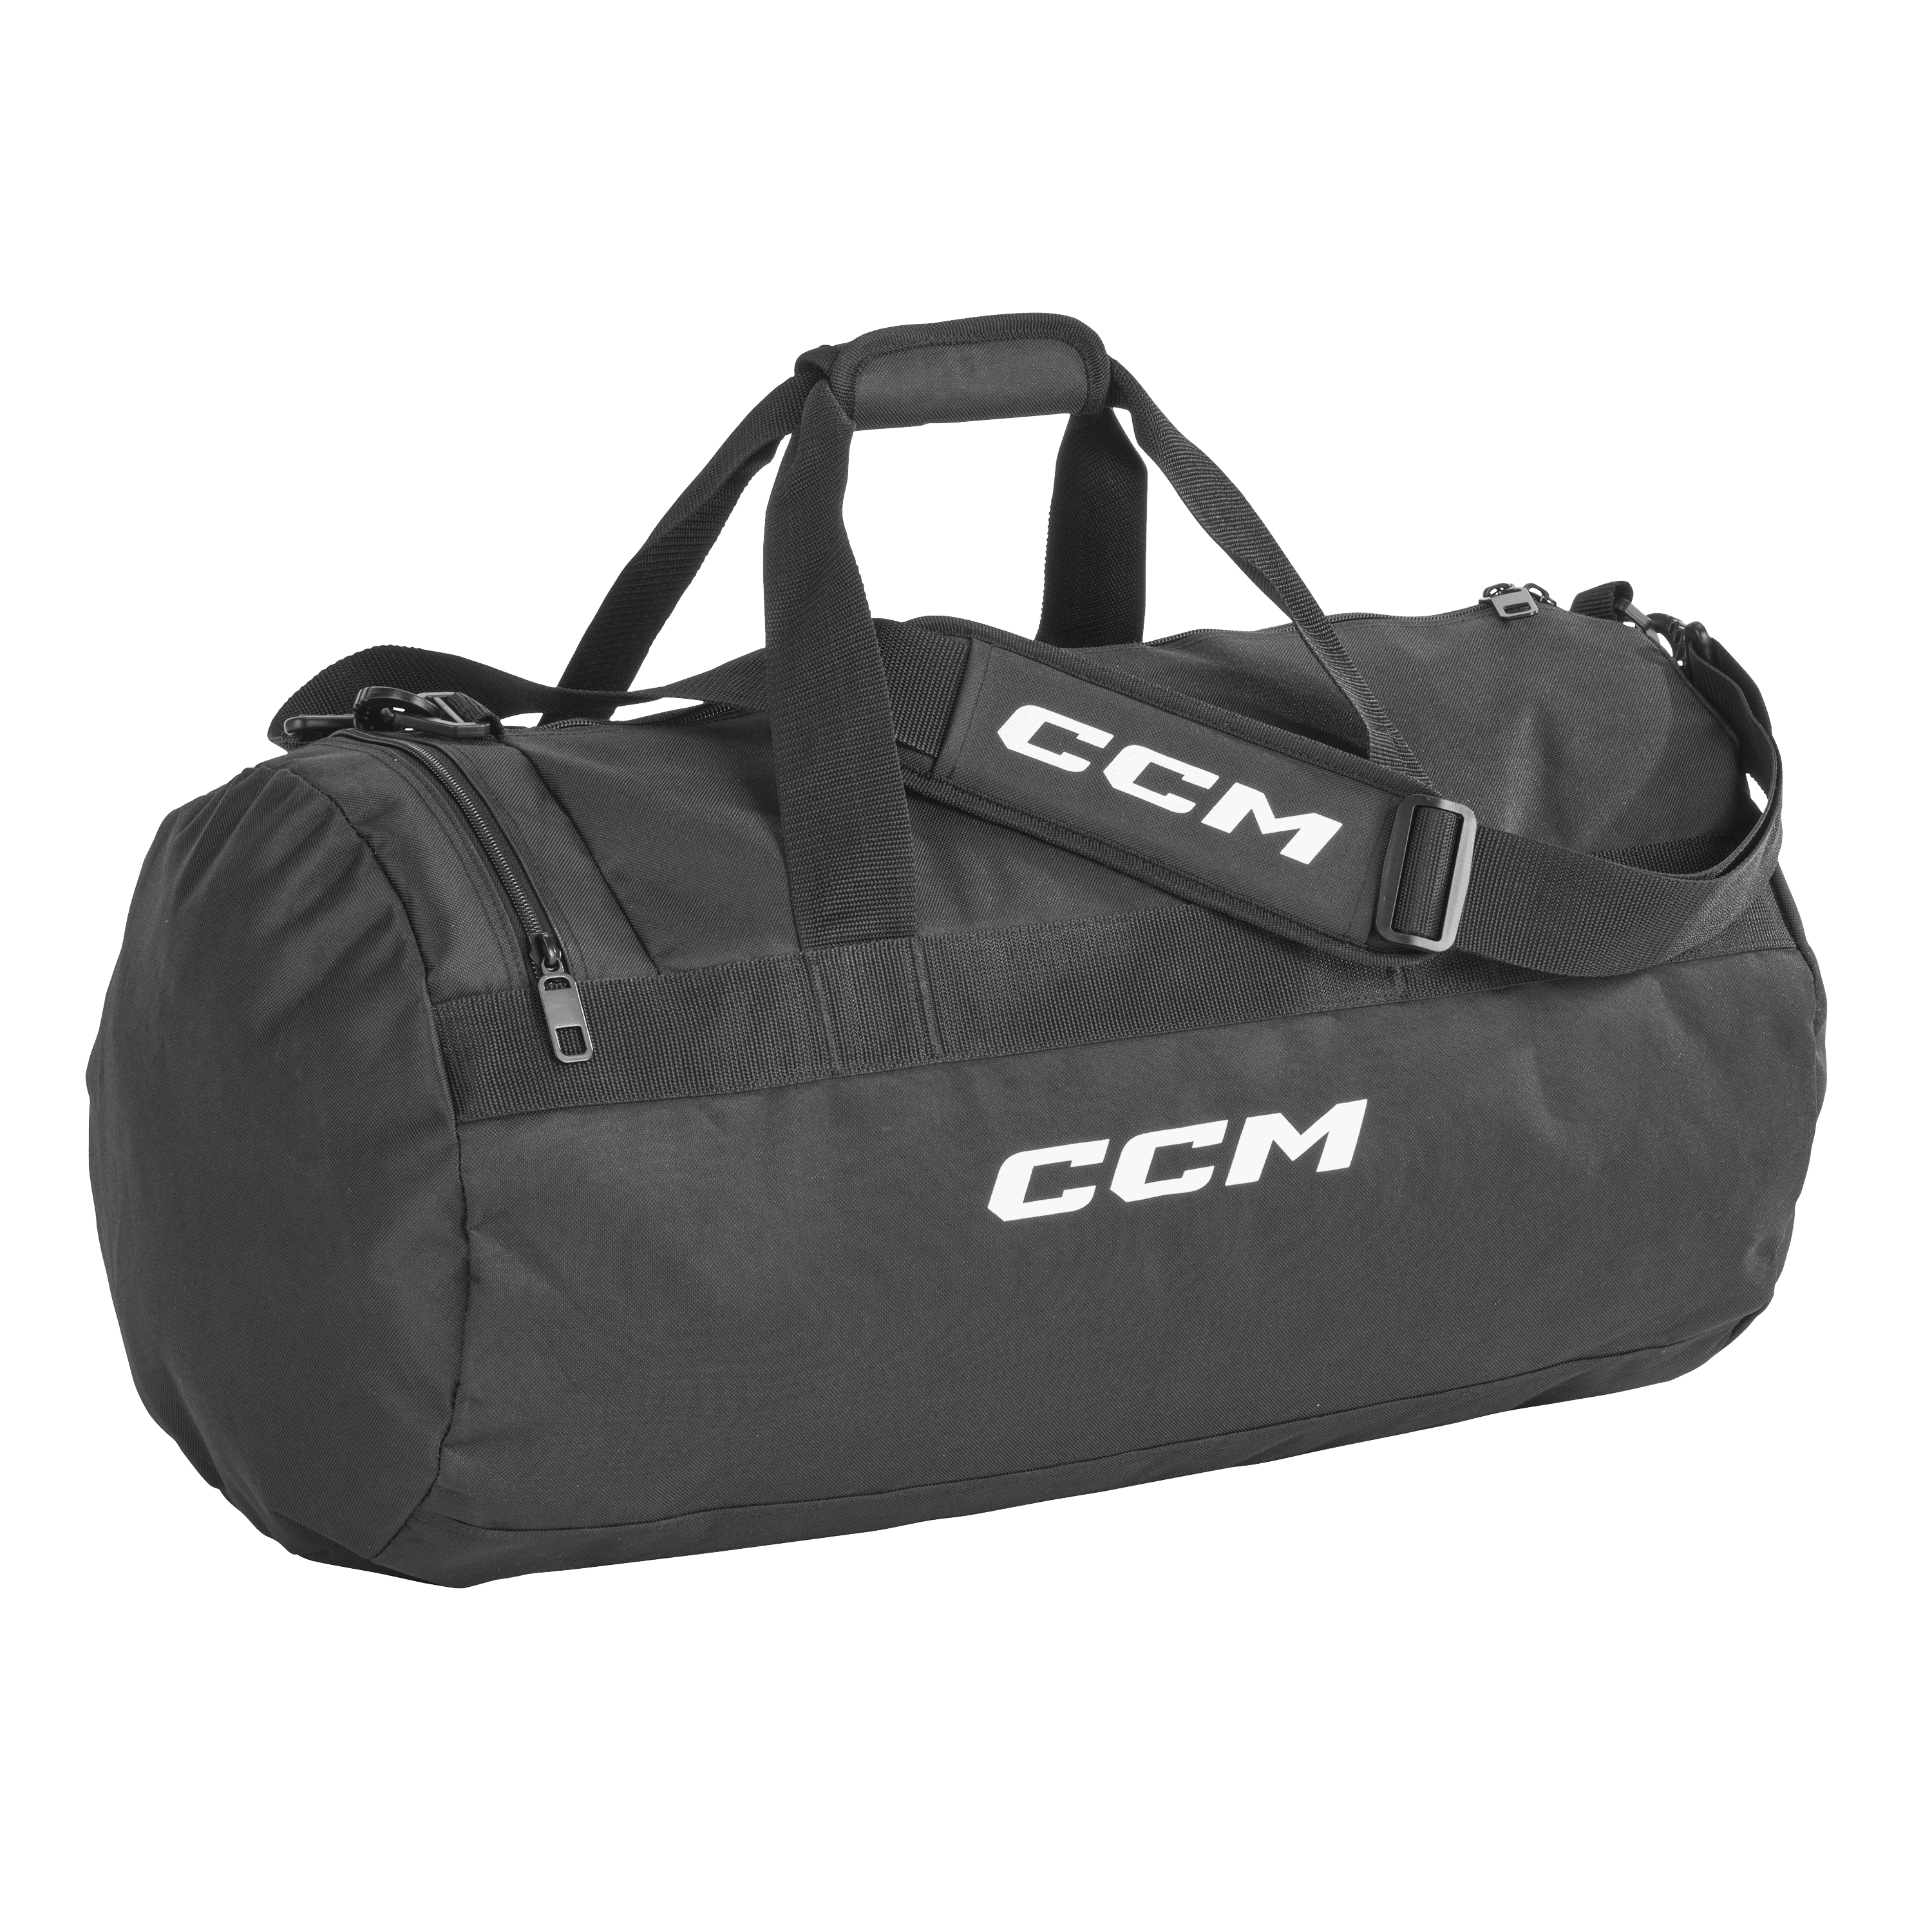 Tasche CCM Sport Bag 3.0 24"L x 13"H x 13" W